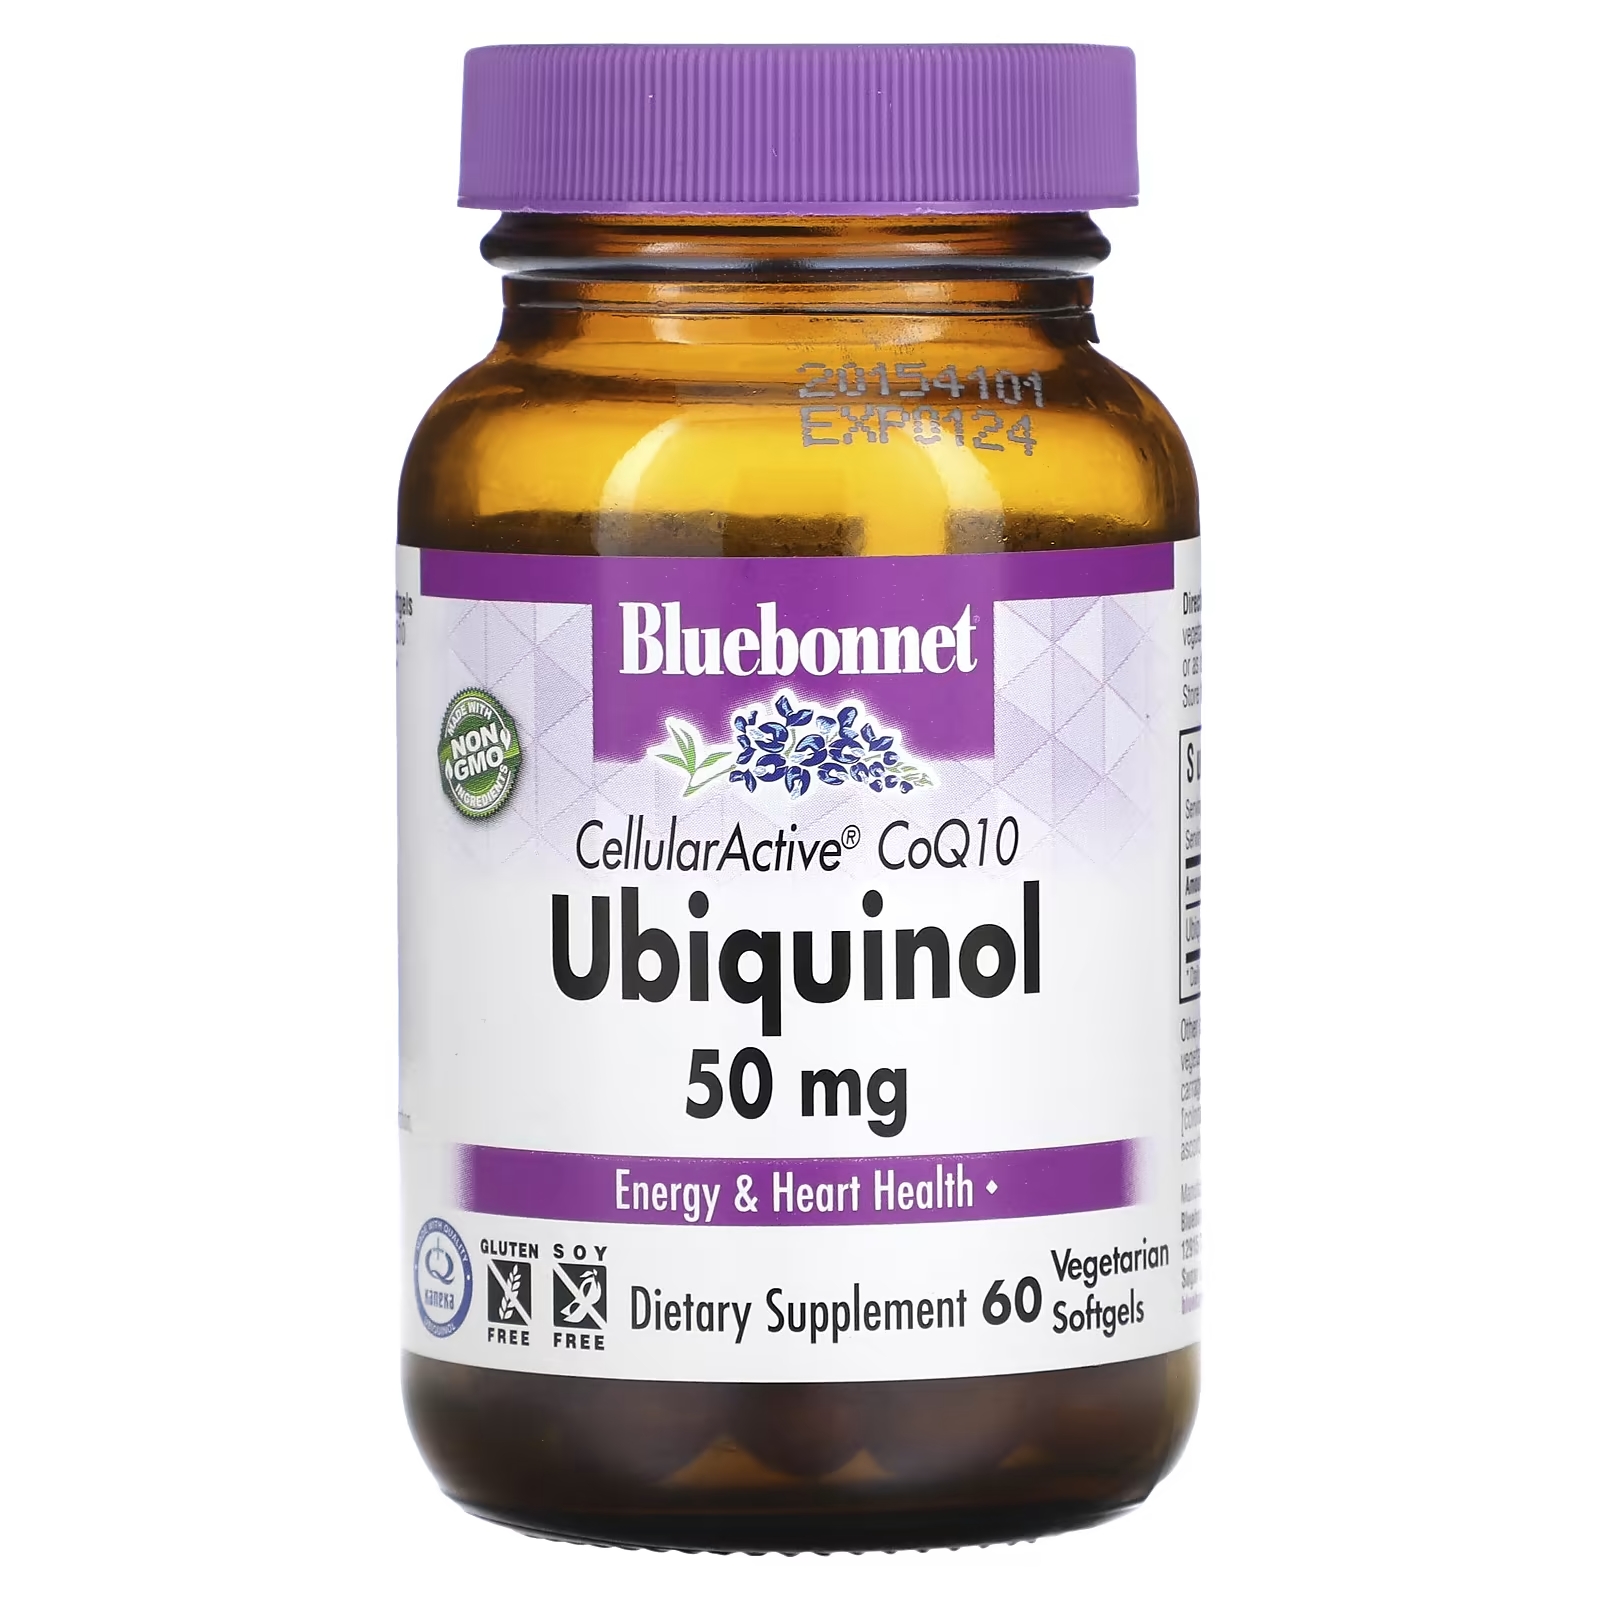 Bluebonnet Nutrition Ubiquinol Cellular Active CoQ10 50 мг, 60 растительных капсул coq10 убихинол cellularactive 50 мг 60 капсул bluebonnet nutrition